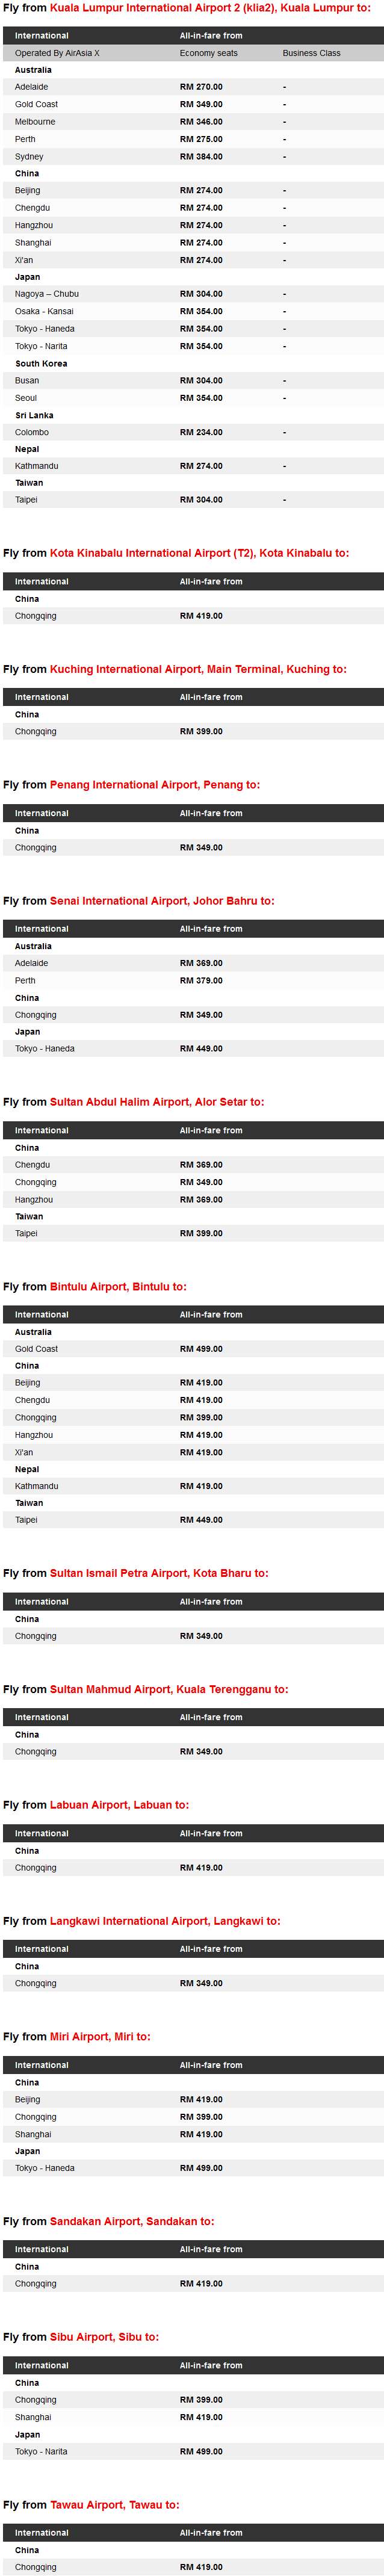 AirAsia X Low Fares Carnival Promo Fares Details